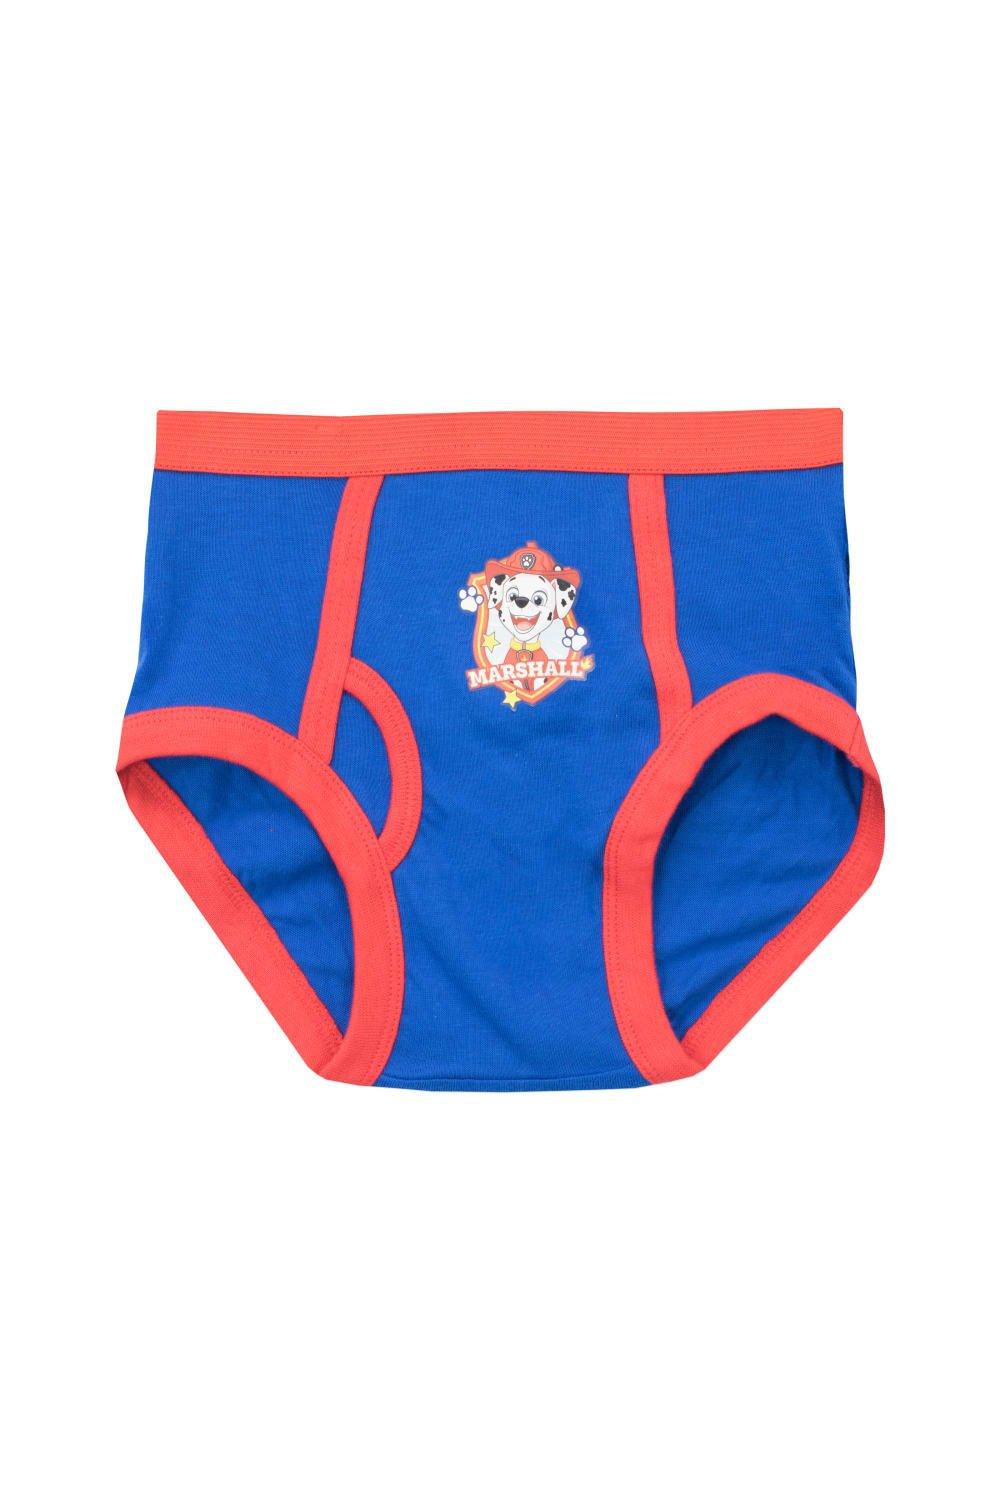 Underwear & Socks, Paw Patrol Underwear 5 Pack